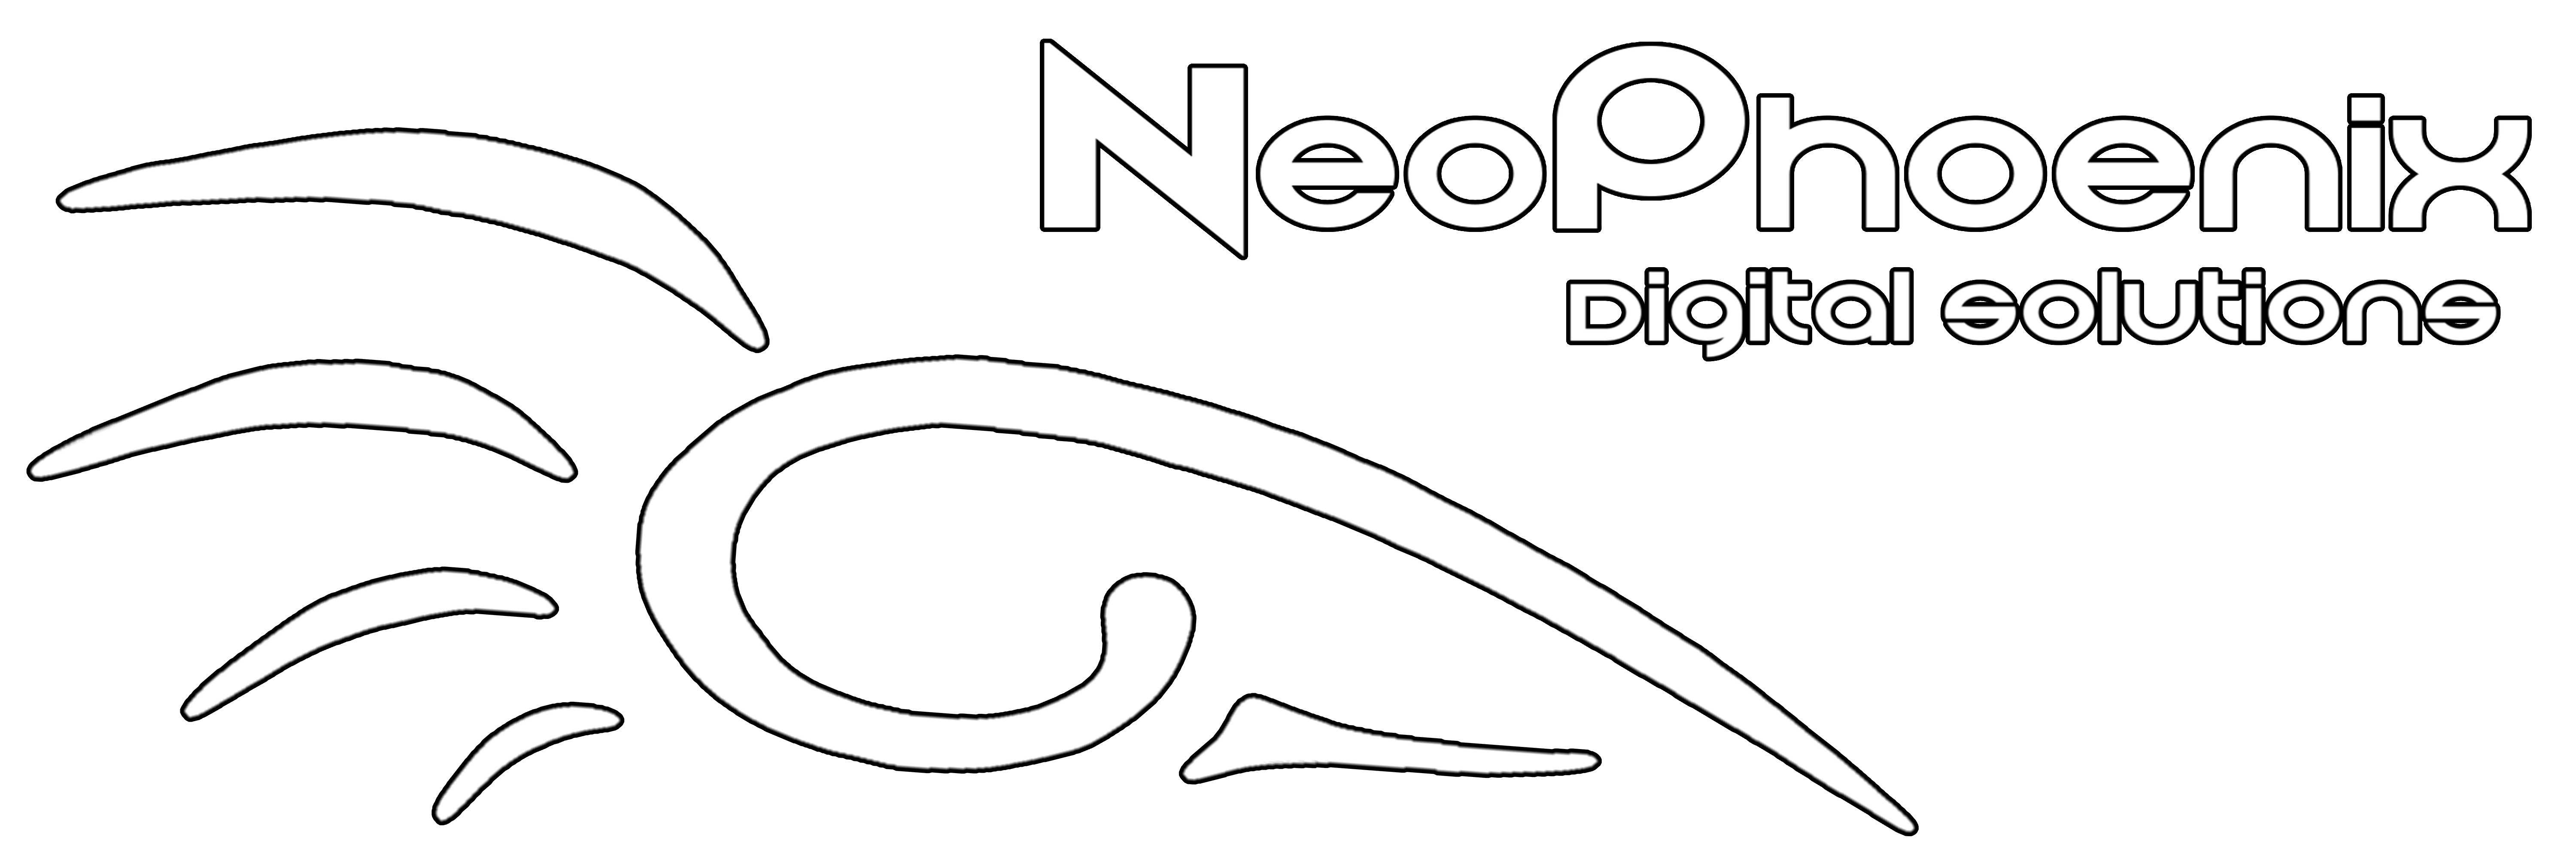 NeoPhoenix Shop Front